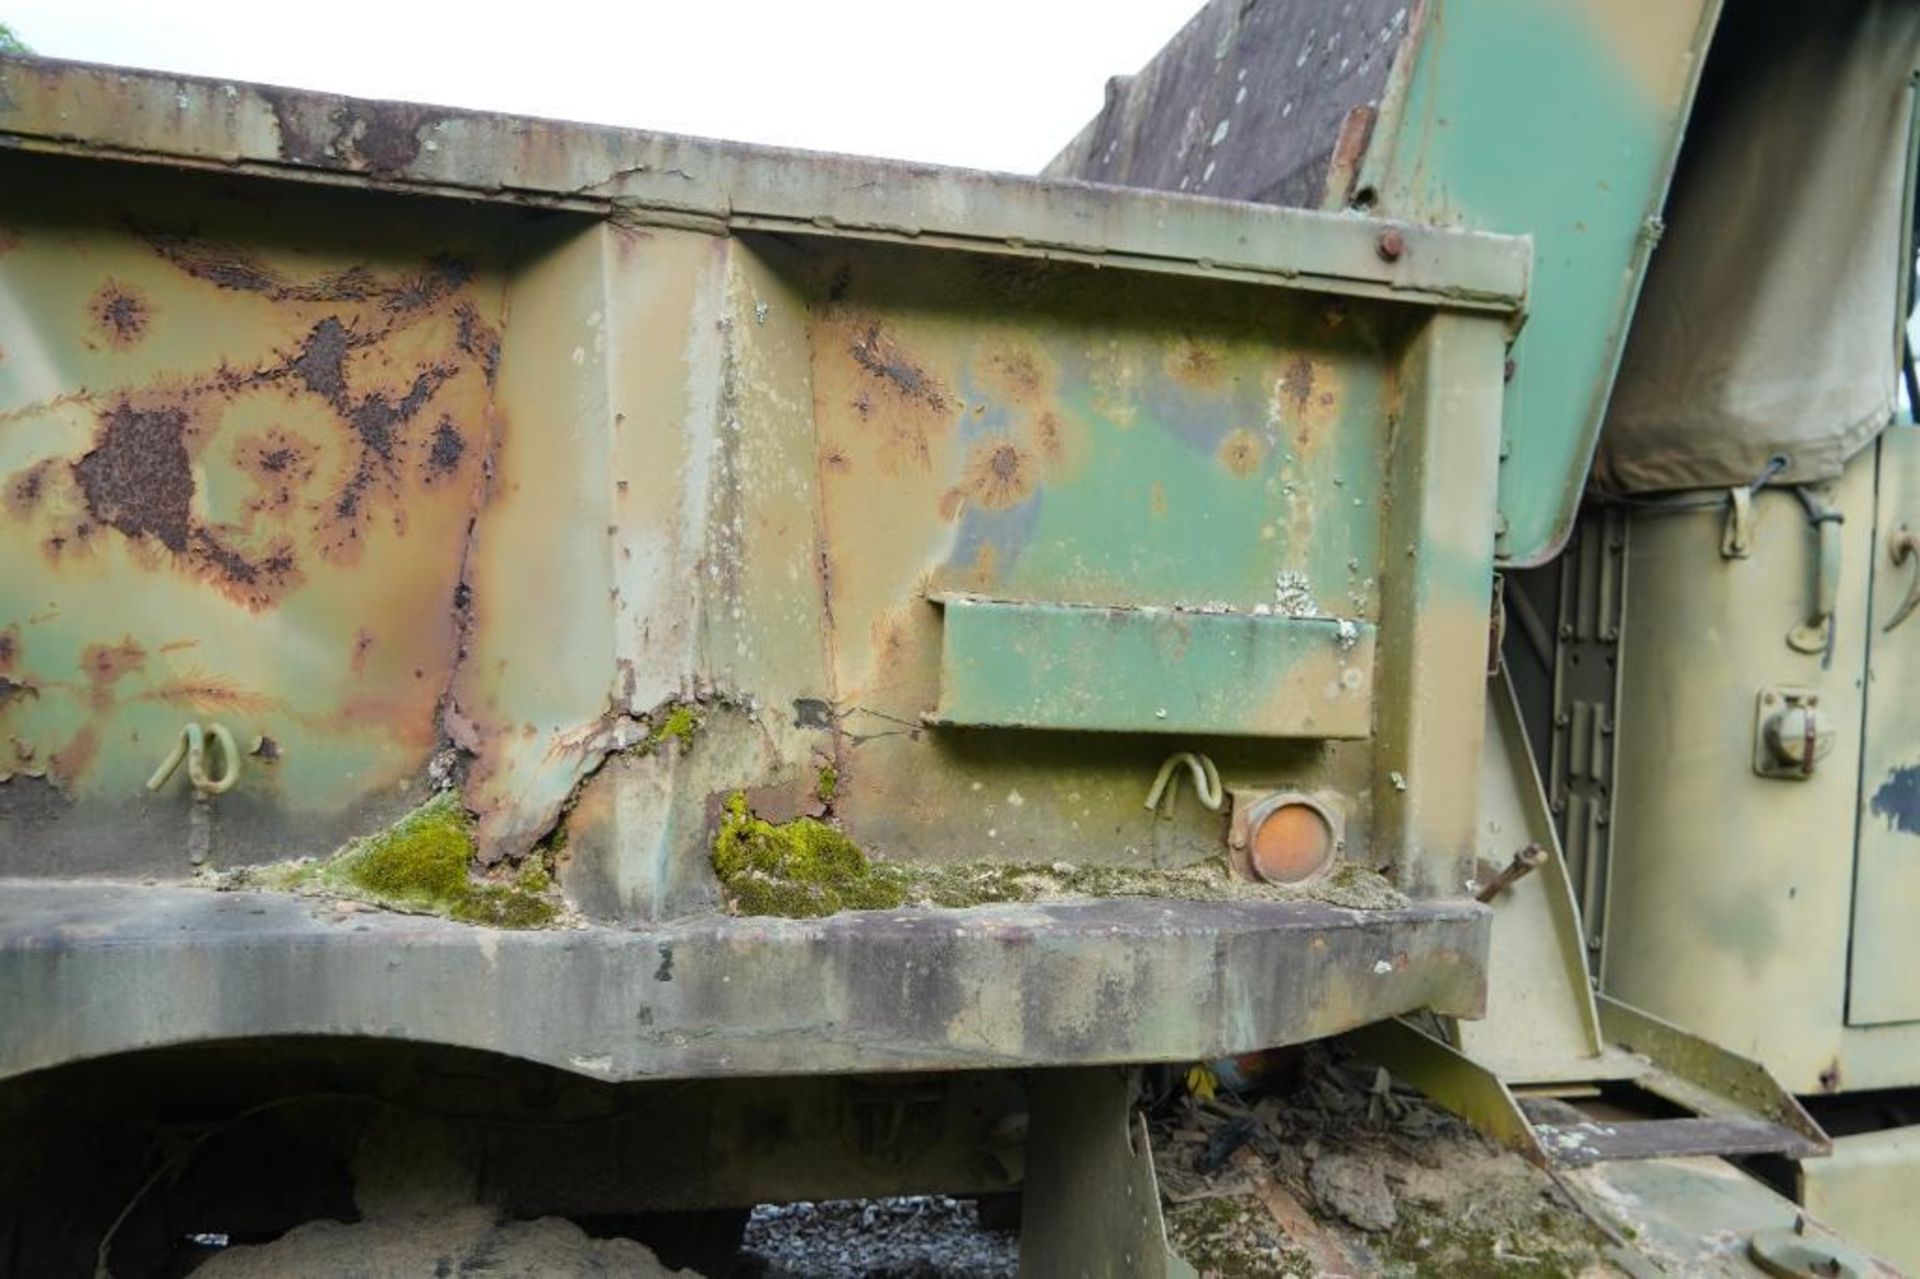 Military 6 x 6 Dump Truck - Image 17 of 50